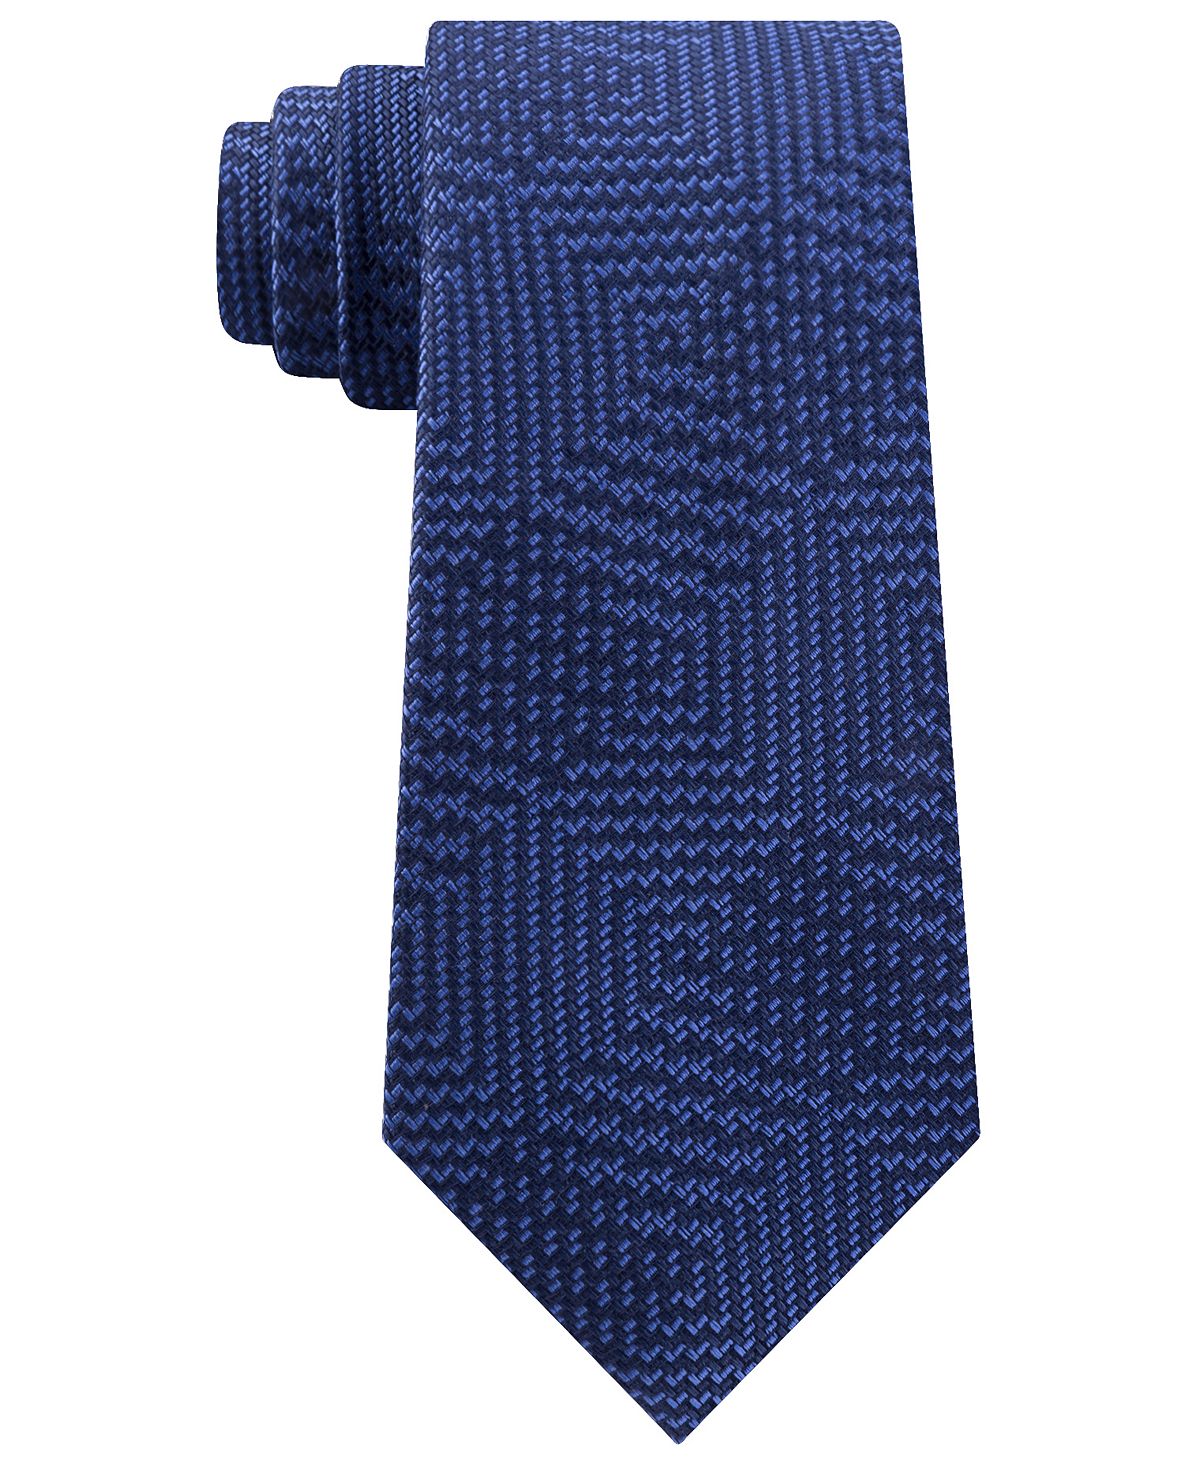 Michael Kors Textured Geometric Patchwork Tie Navy